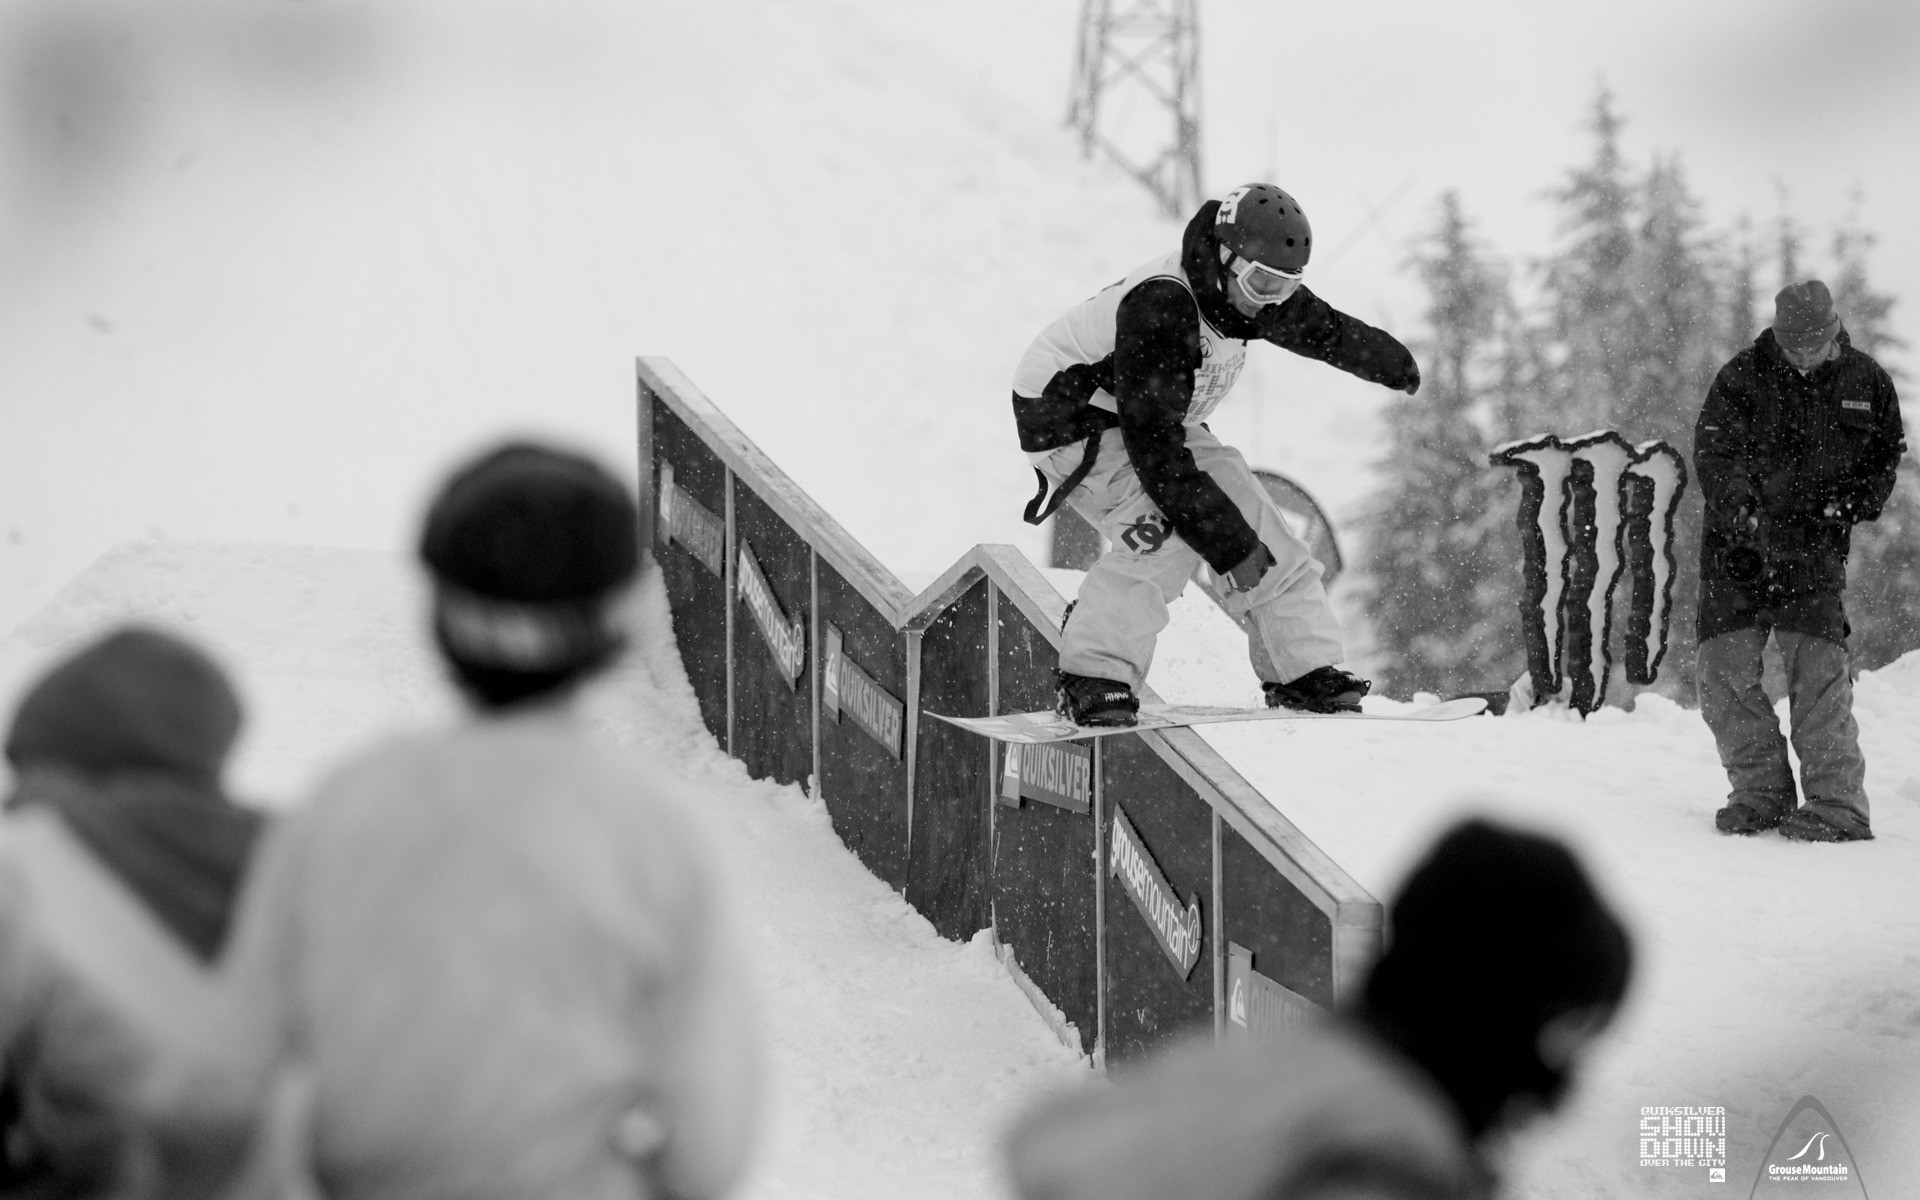 Baixar papel de parede para celular de Snowboard, Esportes gratuito.